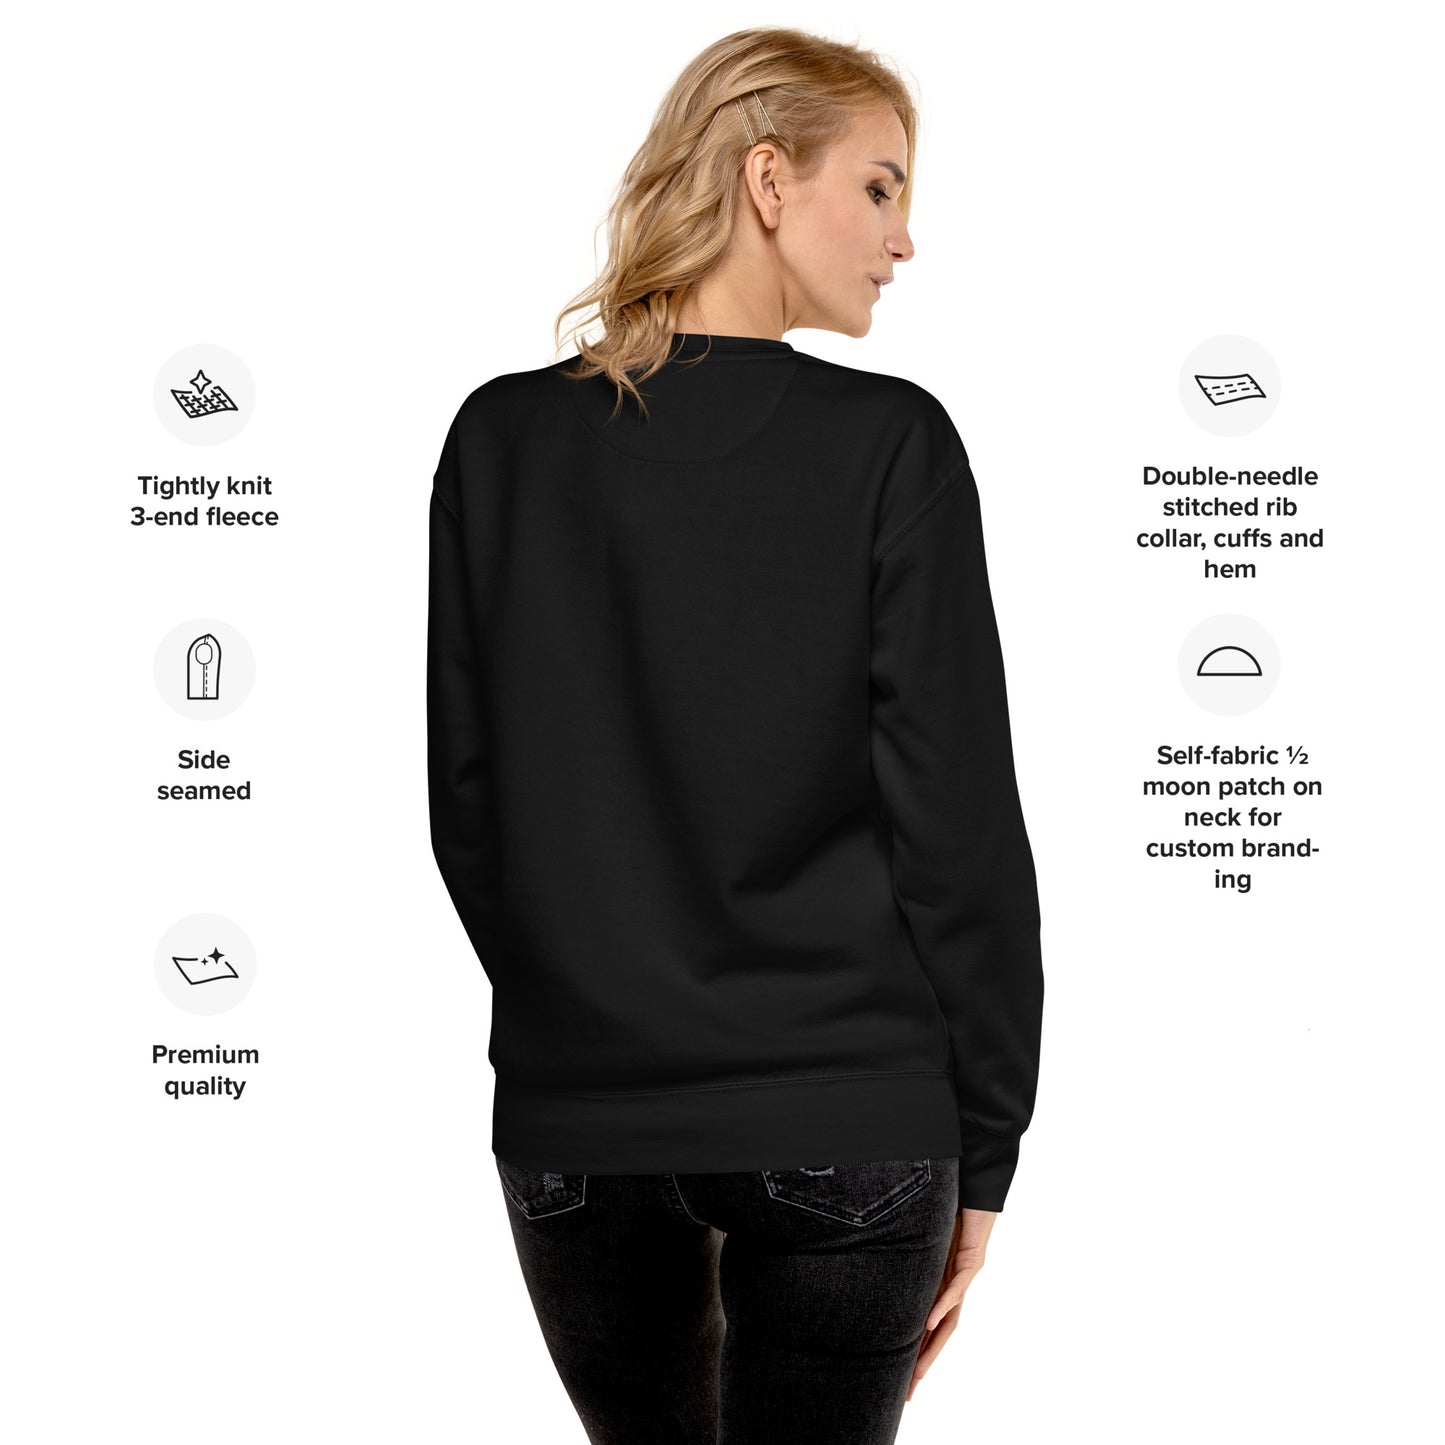 Womanifest Unisex Premium Sweatshirt